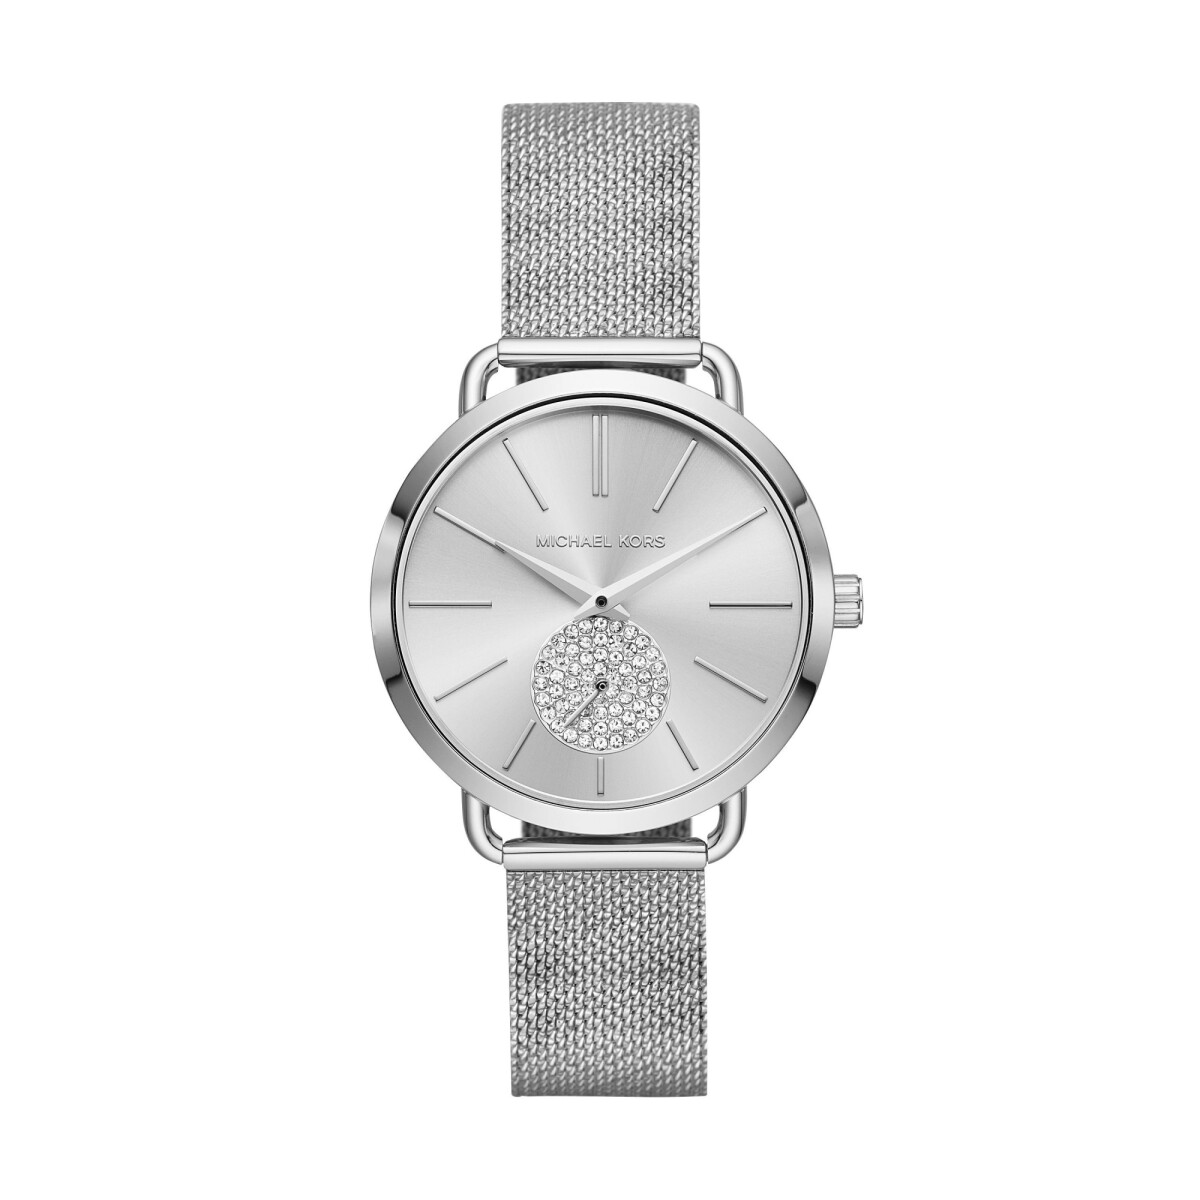 Reloj Pulsera Michael Kors Fashion Acero Plata MK3843 - 001 